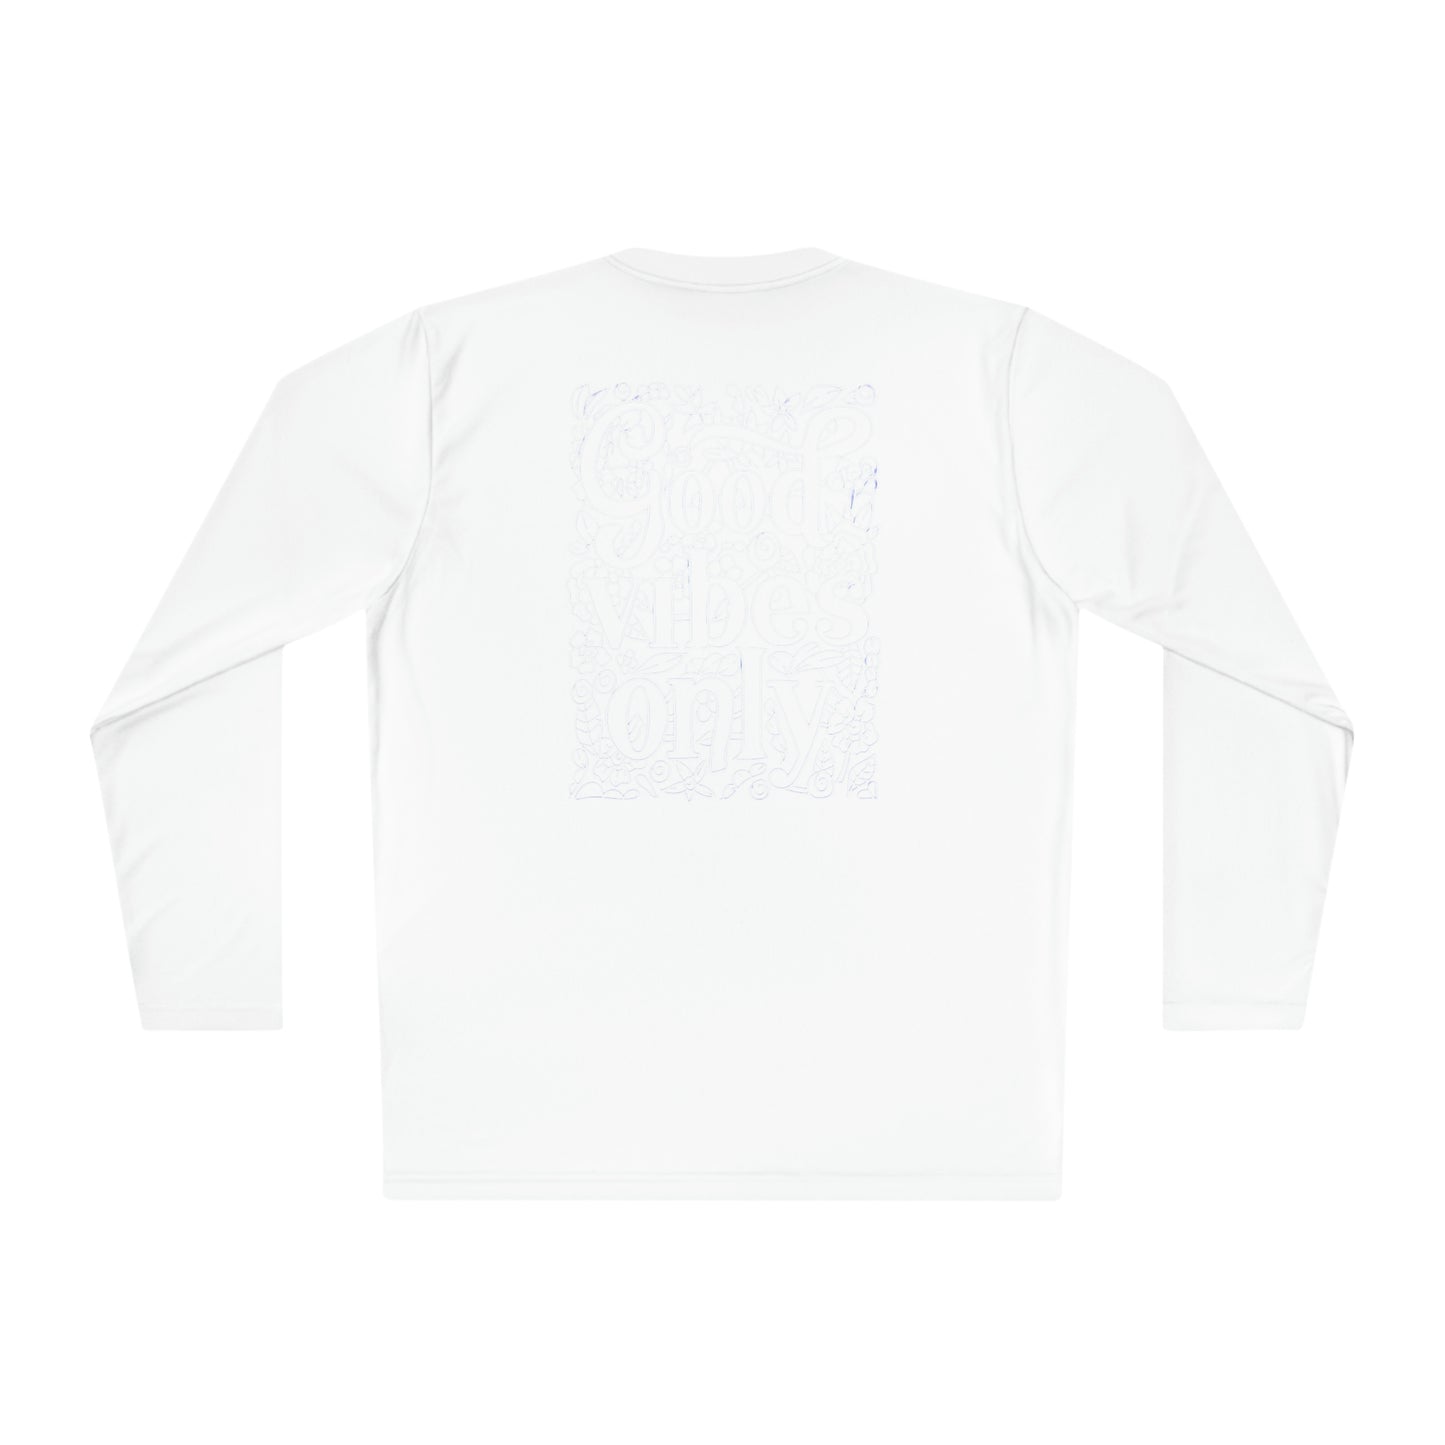 Camiseta de manga larga unisex ligera con estampado "Good Vibes Only" en ambos lados